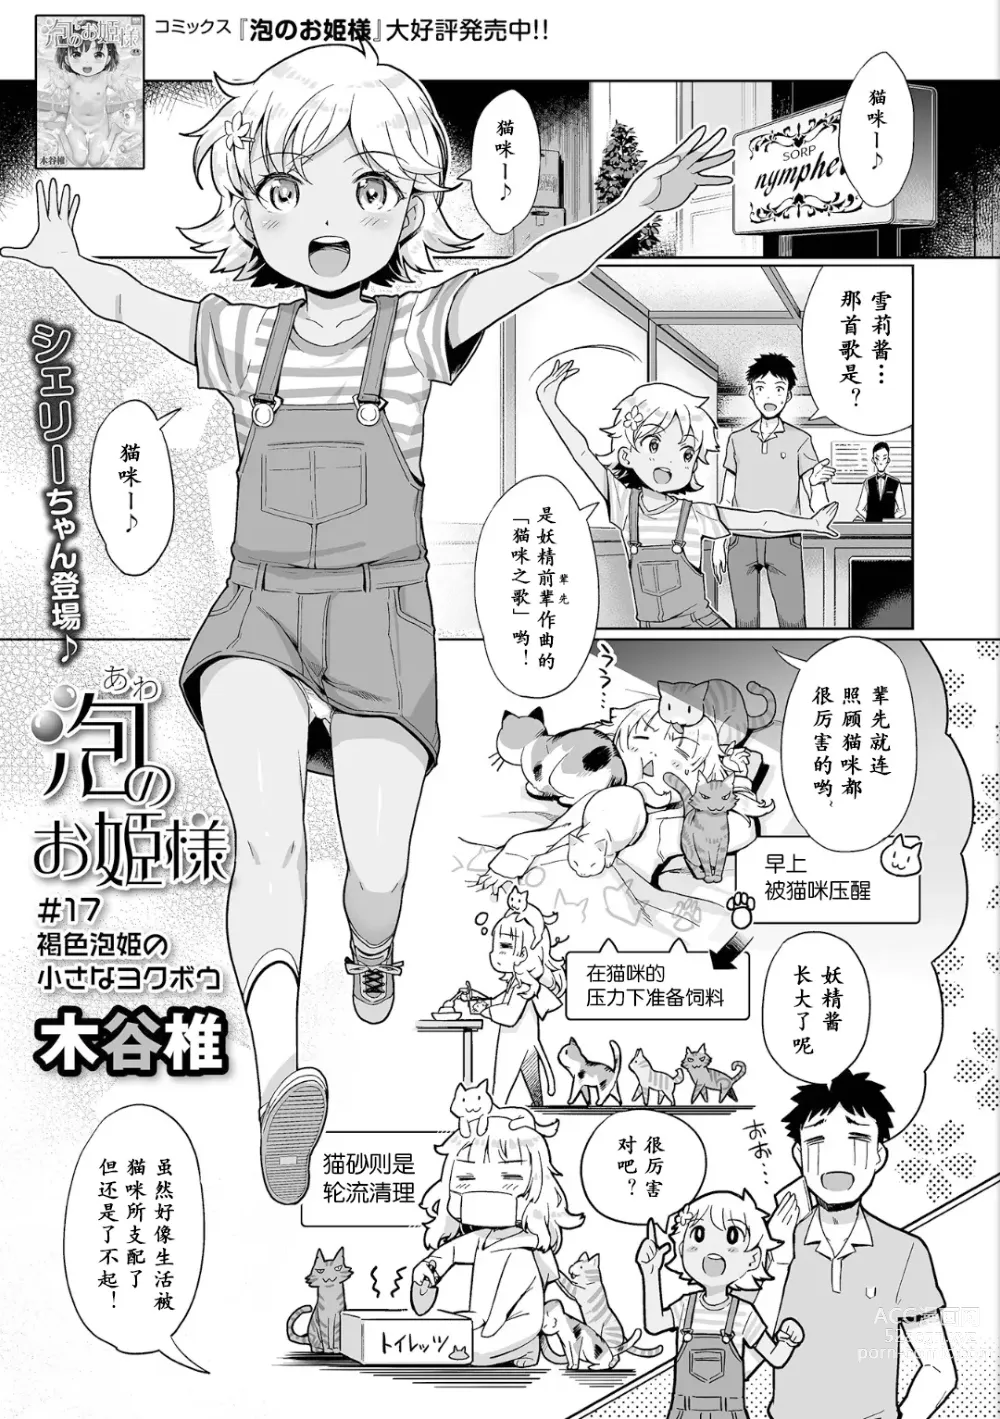 Page 1 of manga Awa no Ohime-sama #17 Kasshoku Awa Hime no Chiisana Yokubou